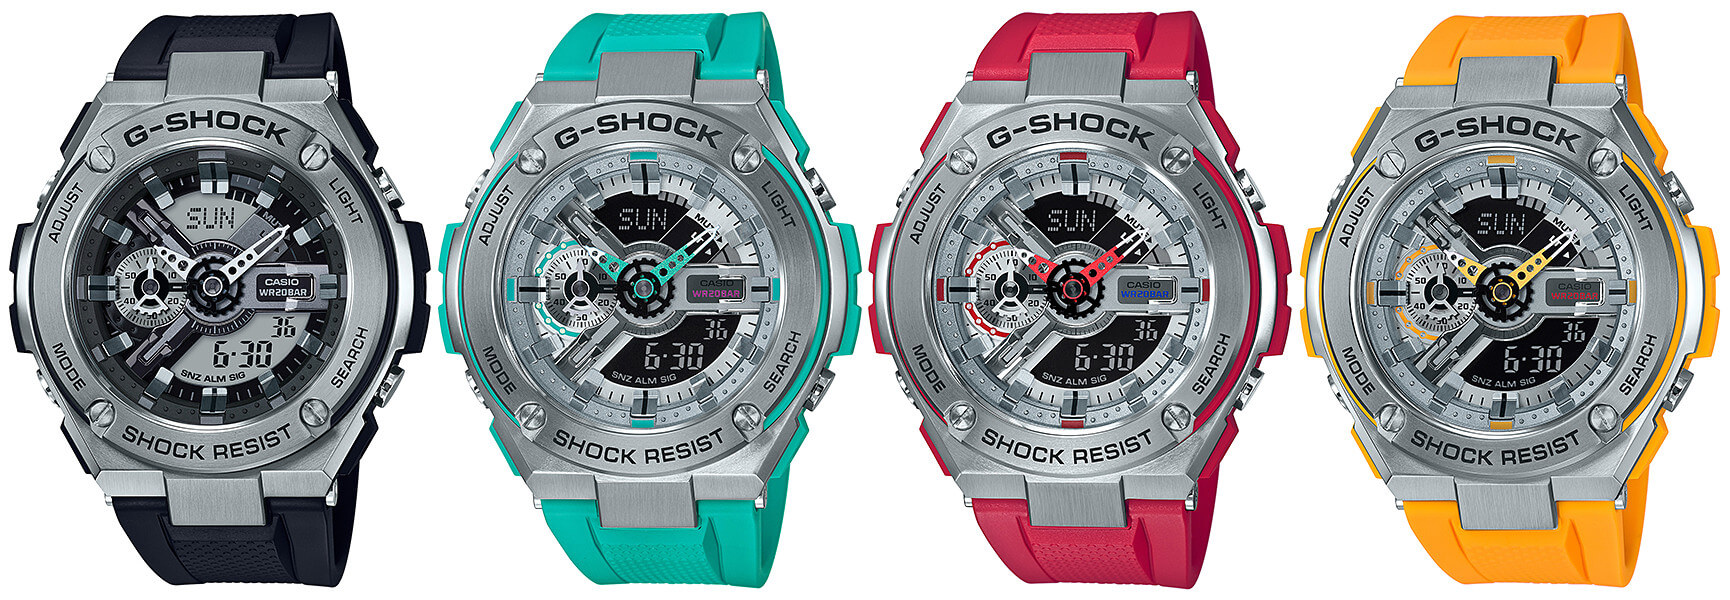 G-Shock G-STEEL GST-410 Series - G-Central G-Shock Fan Site